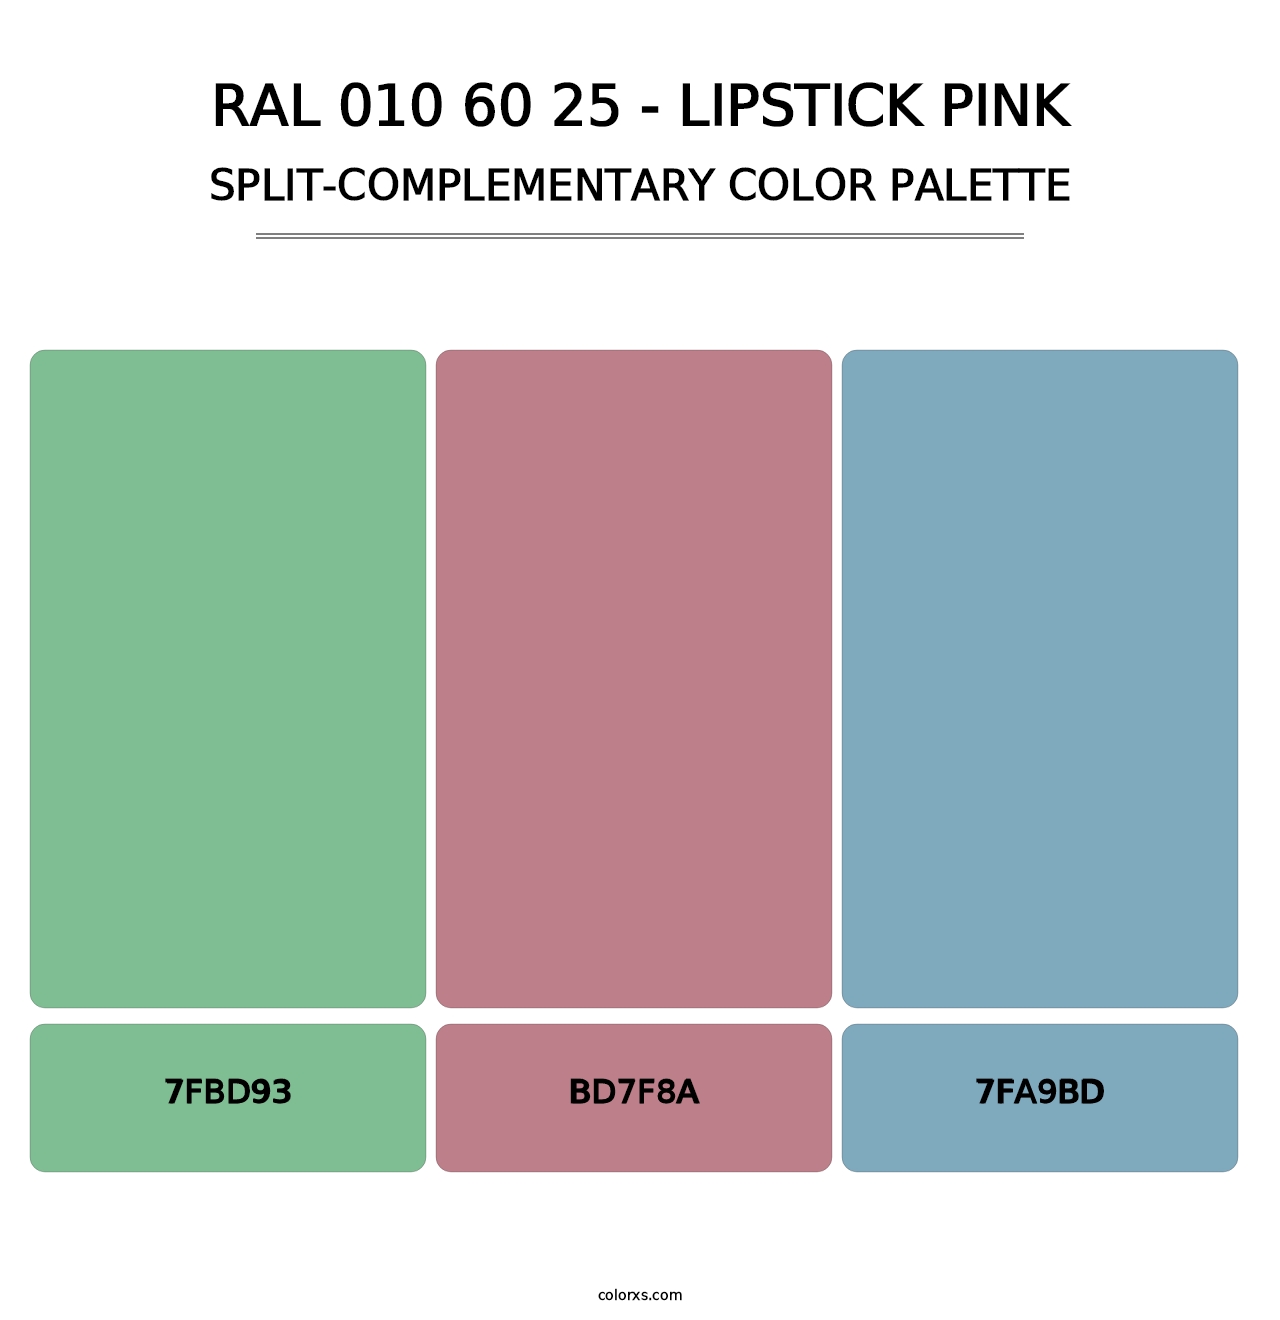 RAL 010 60 25 - Lipstick Pink - Split-Complementary Color Palette